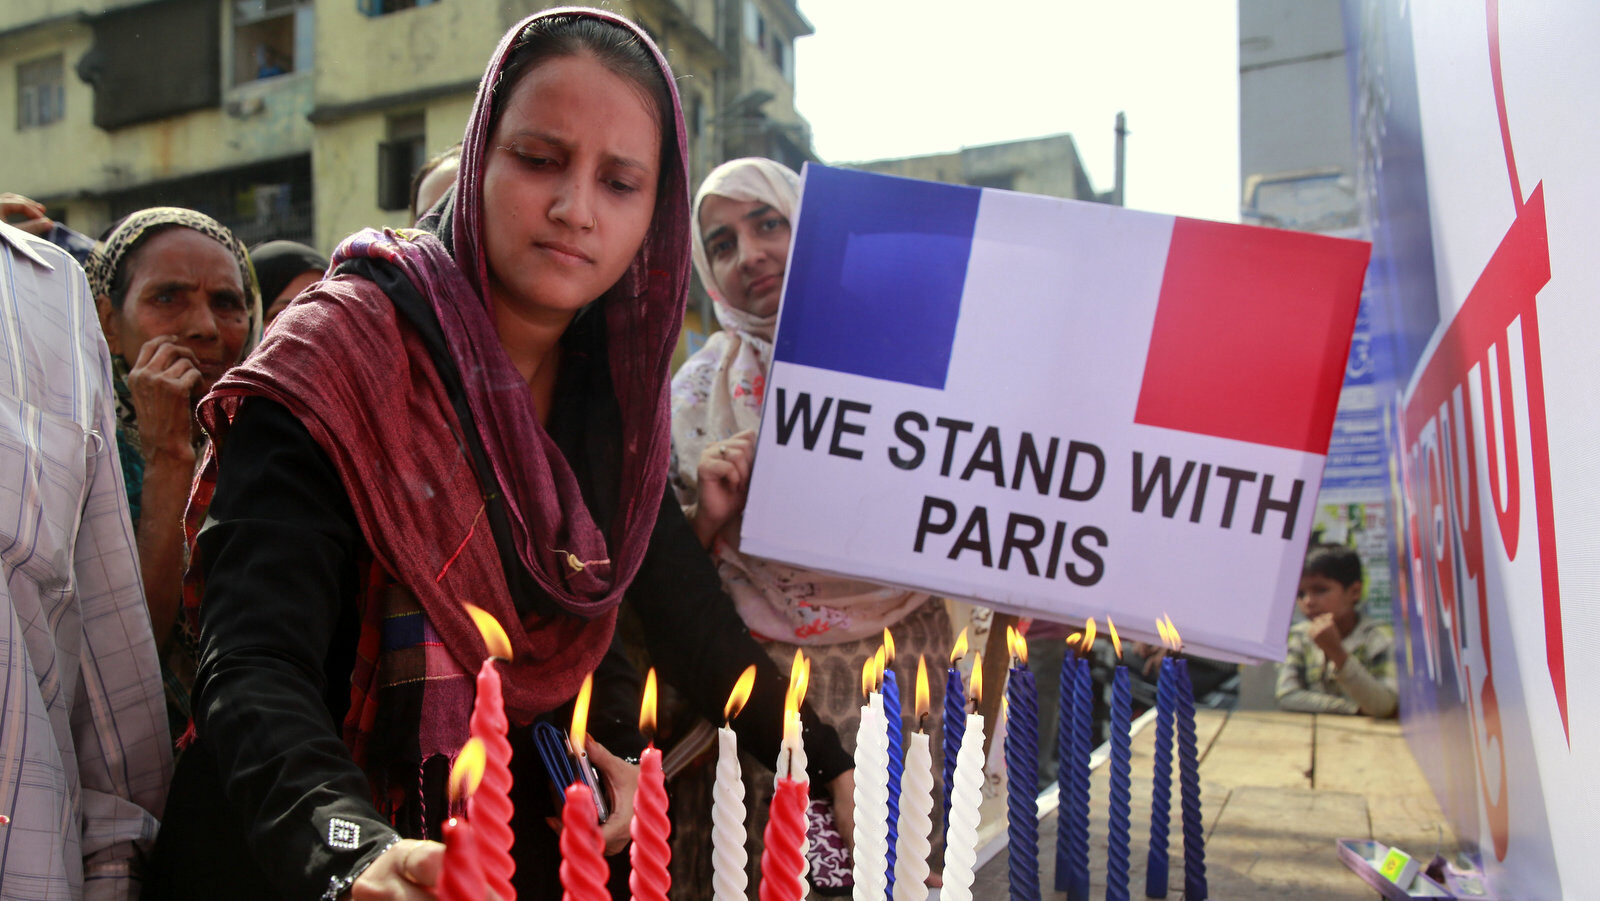 Indian Muslim women expressing solidarity with France following Friday’s attacks in Paris light candles in Mumbai, India, Monday, Nov.16, 2015. (AP Photo/Rafiq Maqbool)